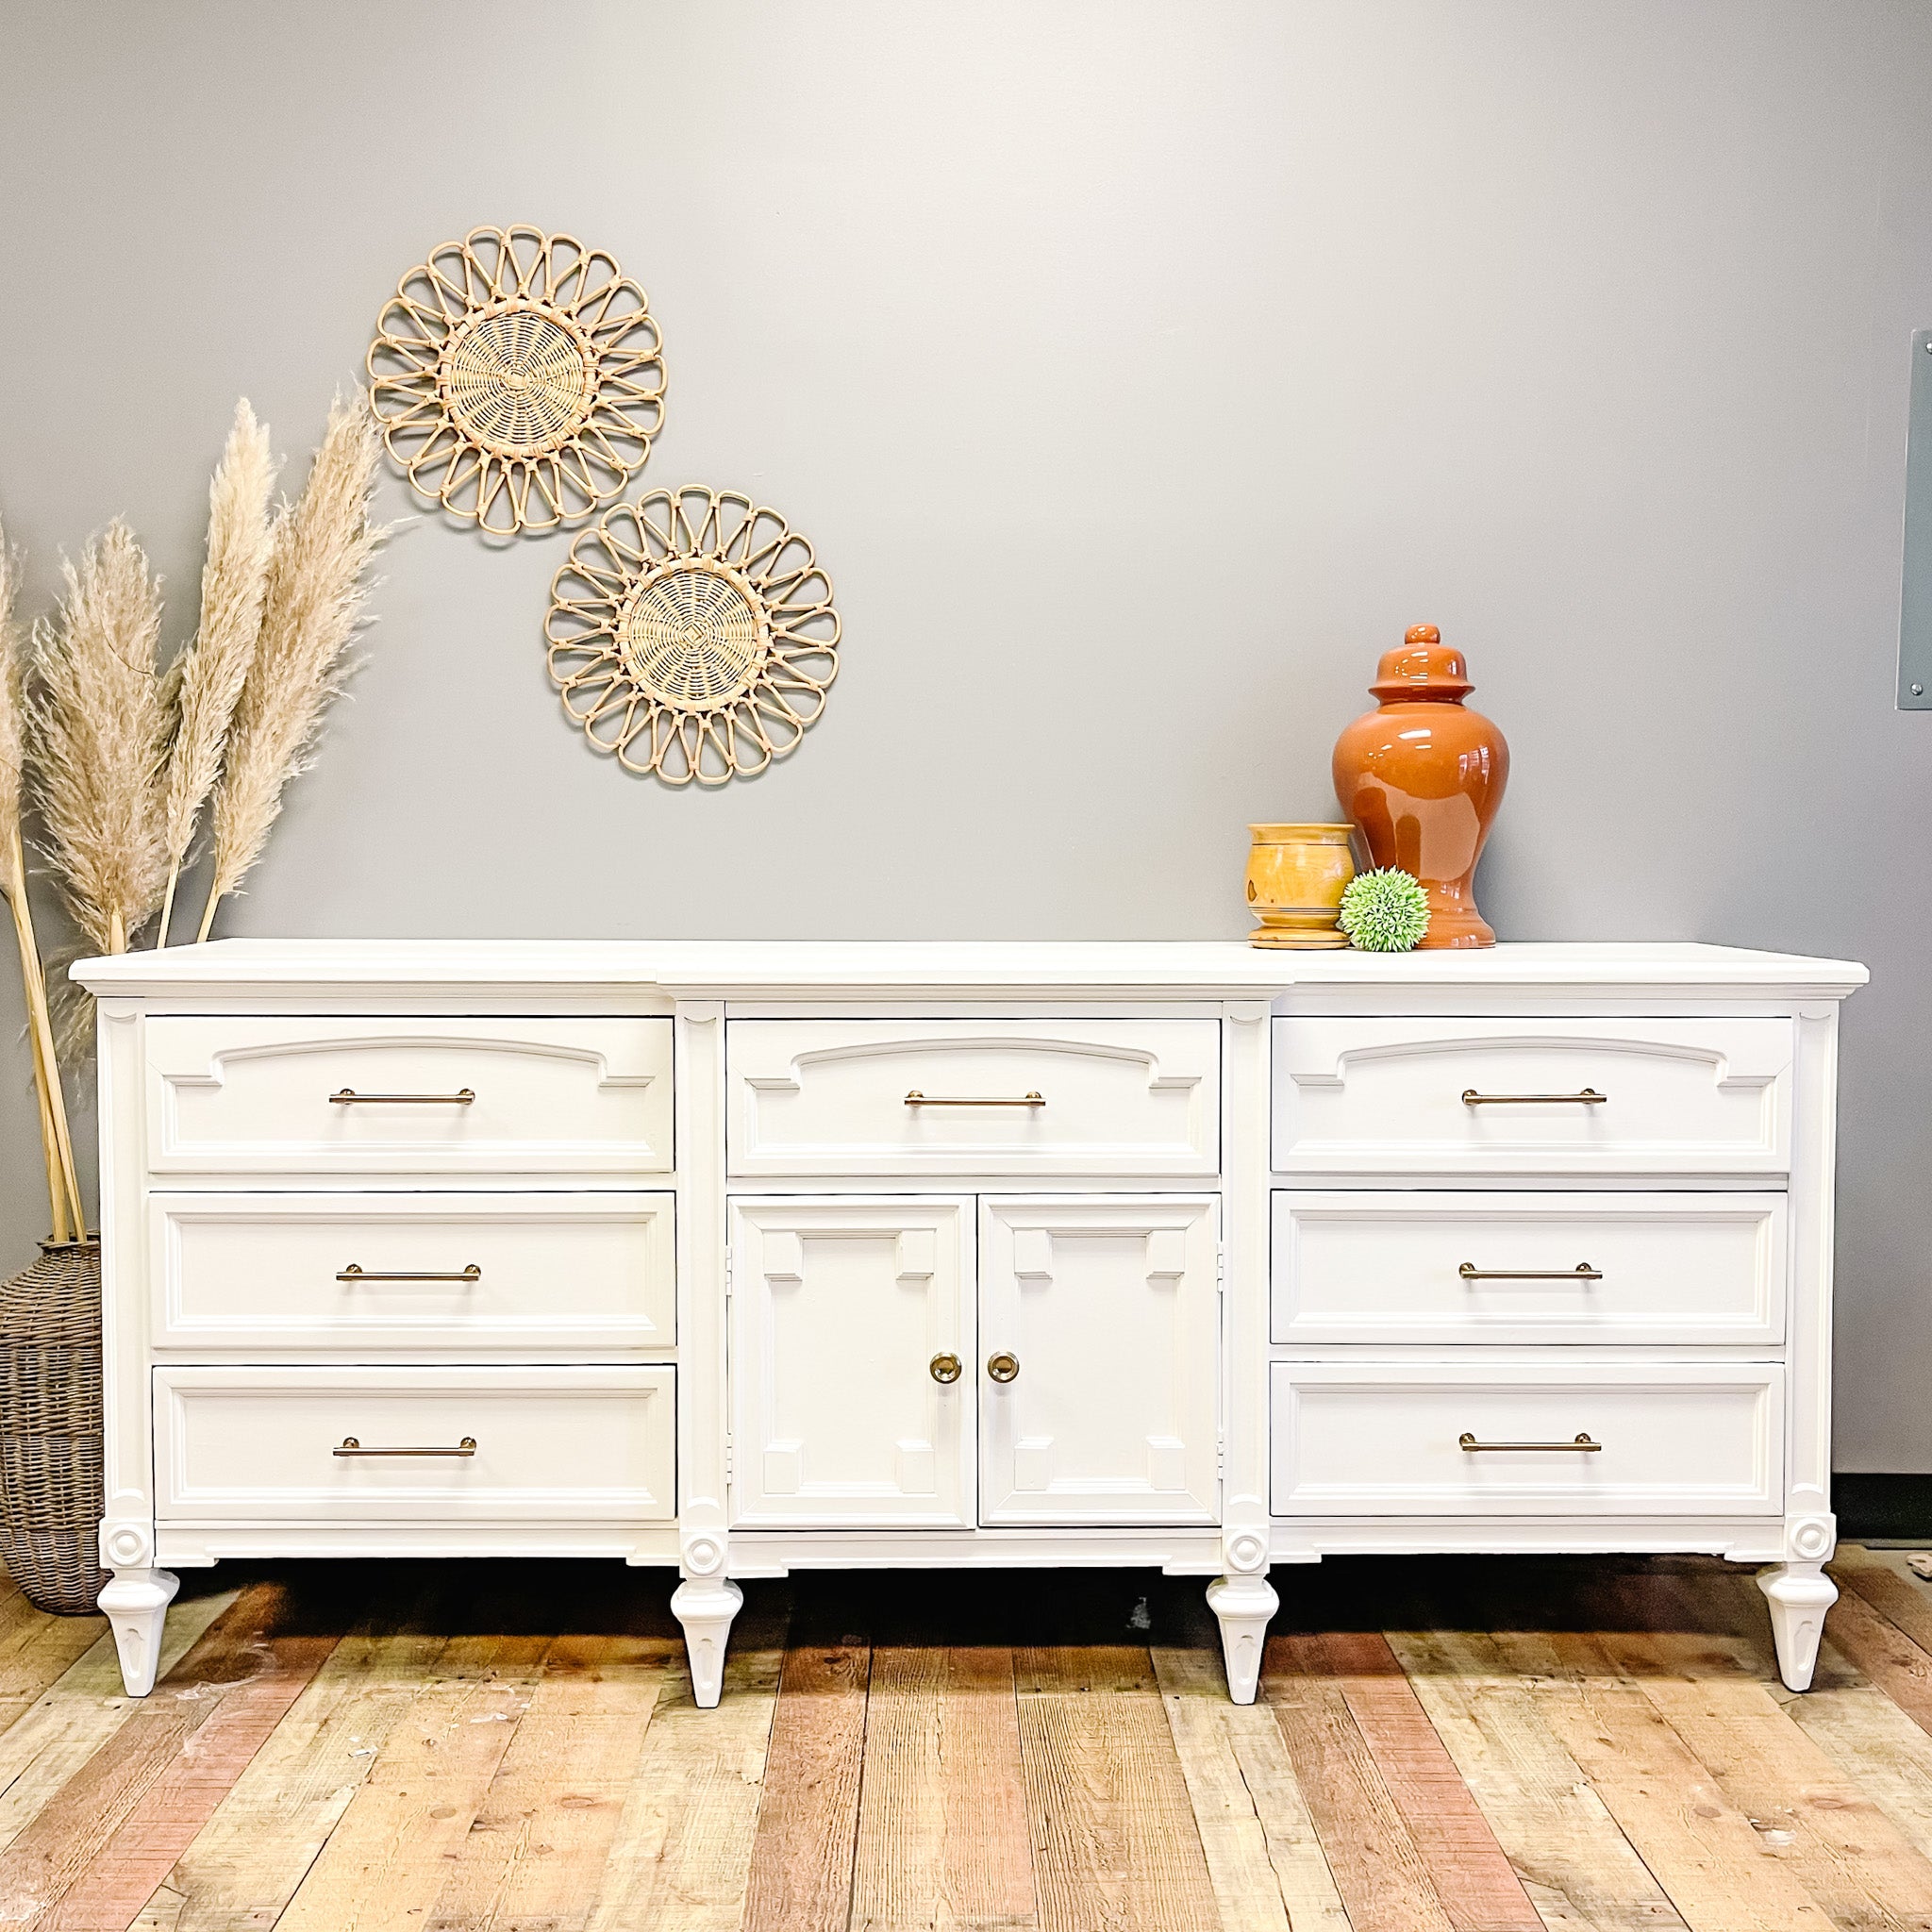 A large vintage dresser is painted in Dixie Belle's Cotton chalk mineral paint.